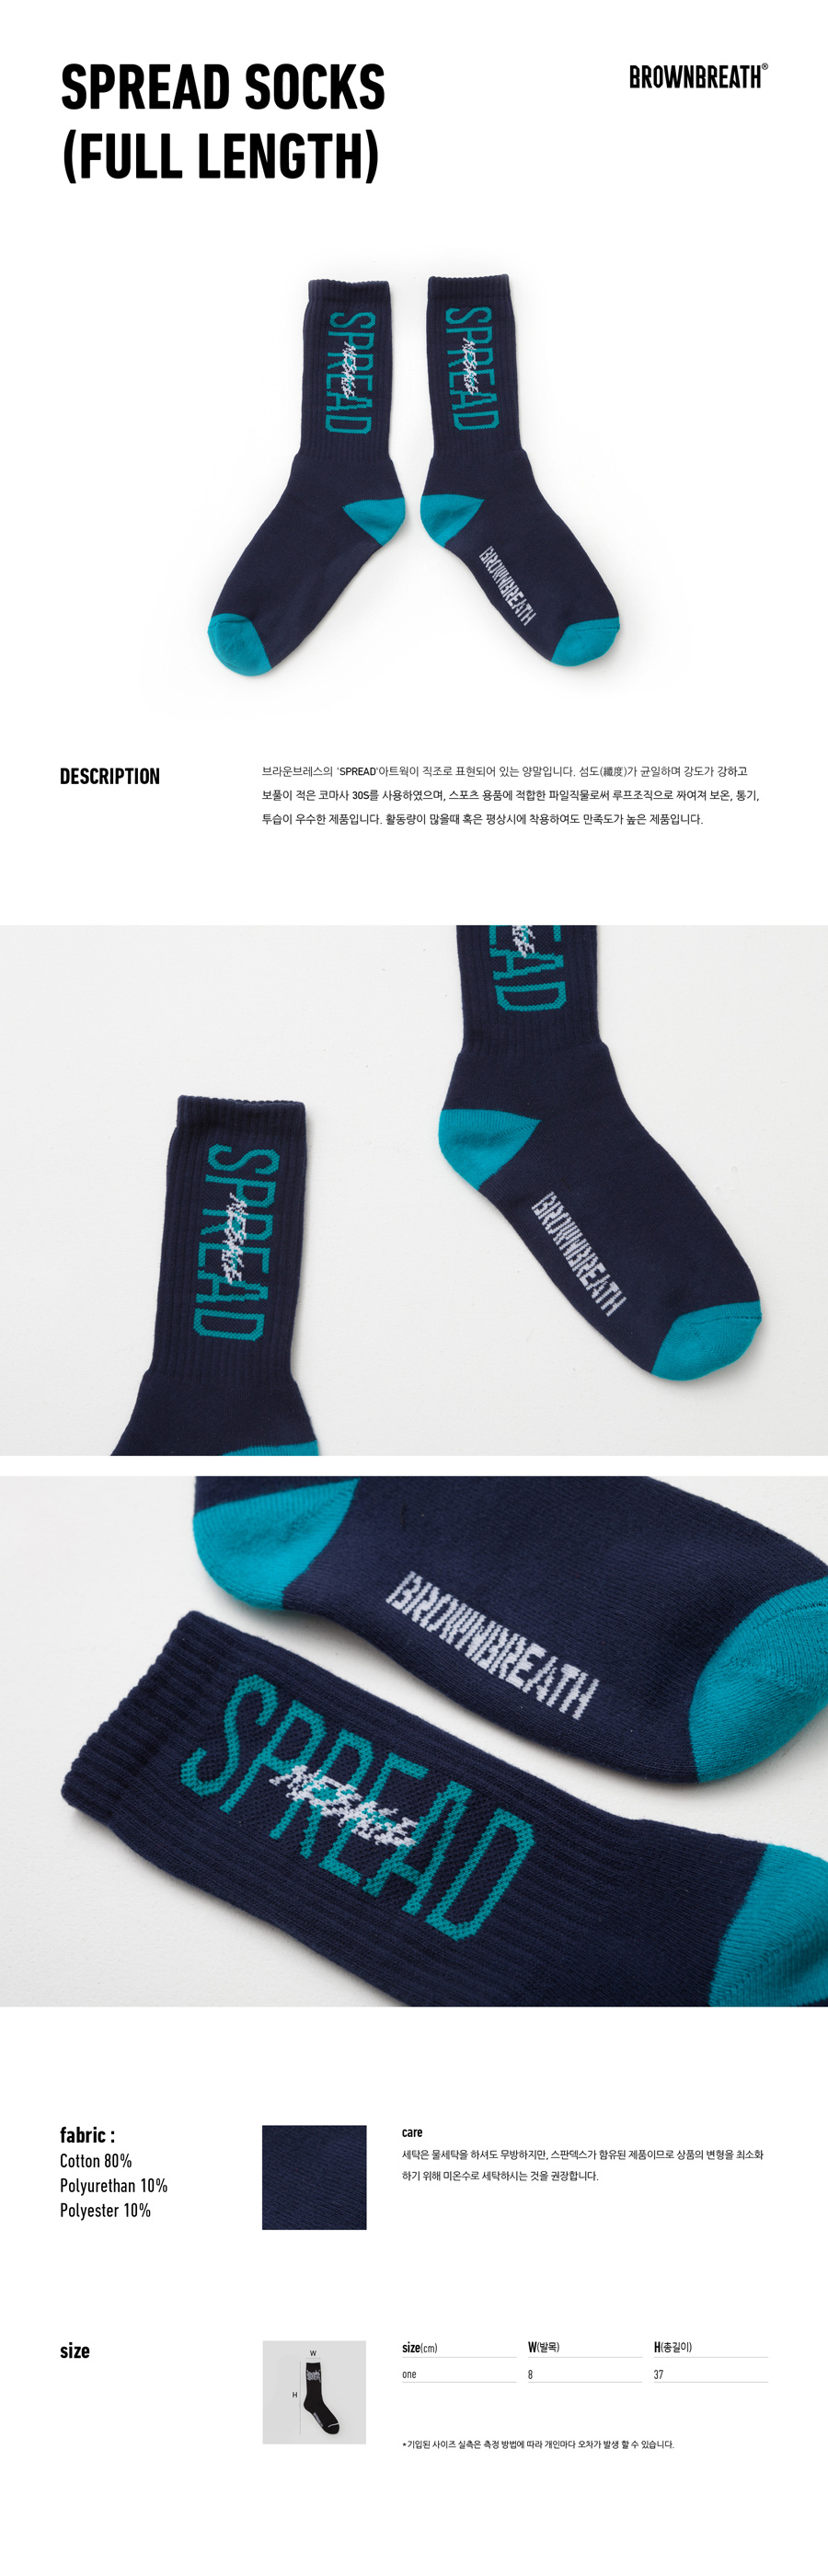 d_0062_spread_socks.jpg